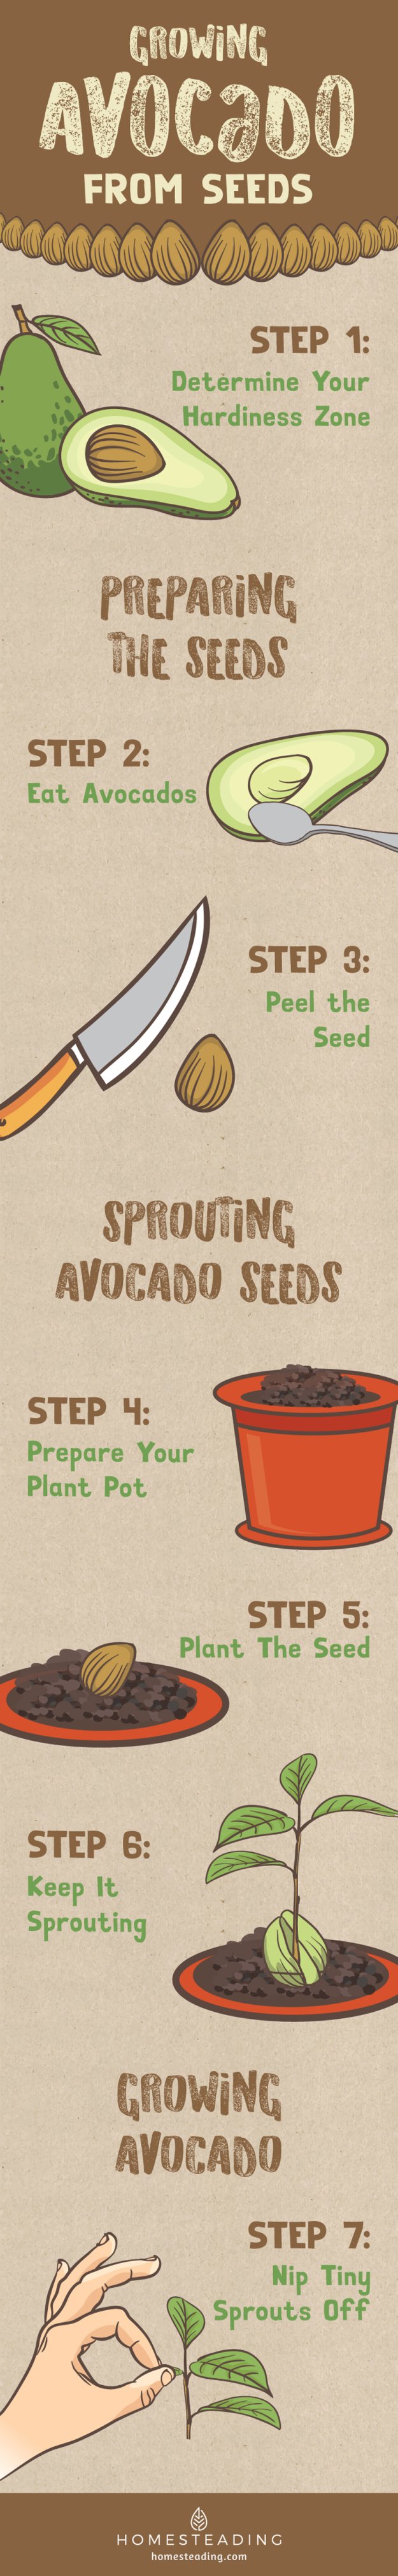 Growing Avocado From Seeds | Garden Season Guide | Infographic